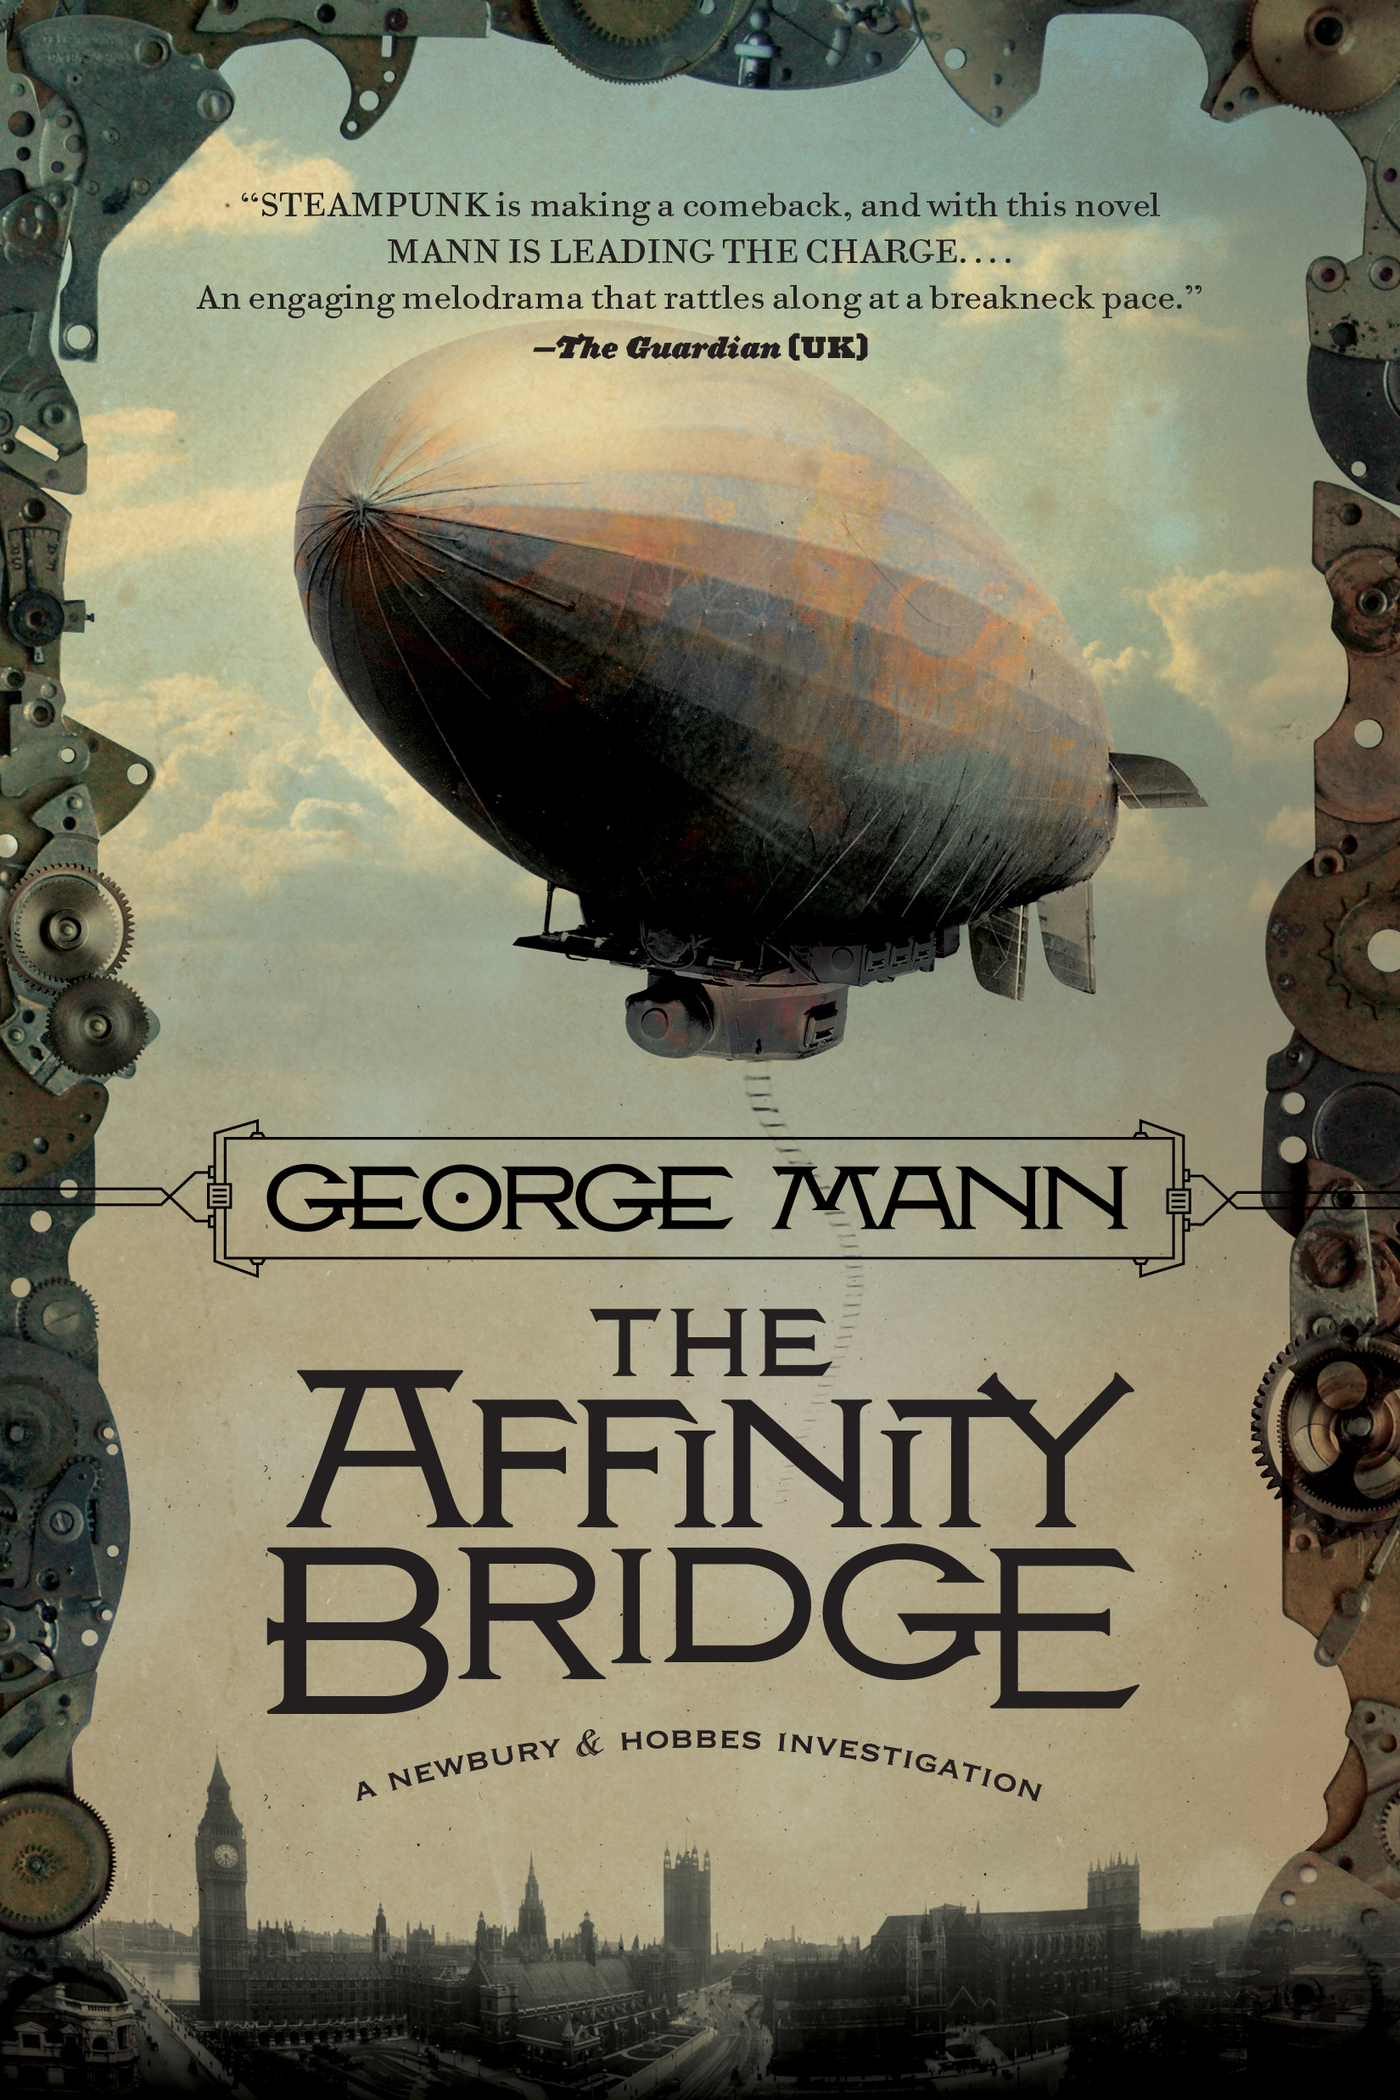 The Affinity Bridge : A Newbury & Hobbes Investigation by George Mann